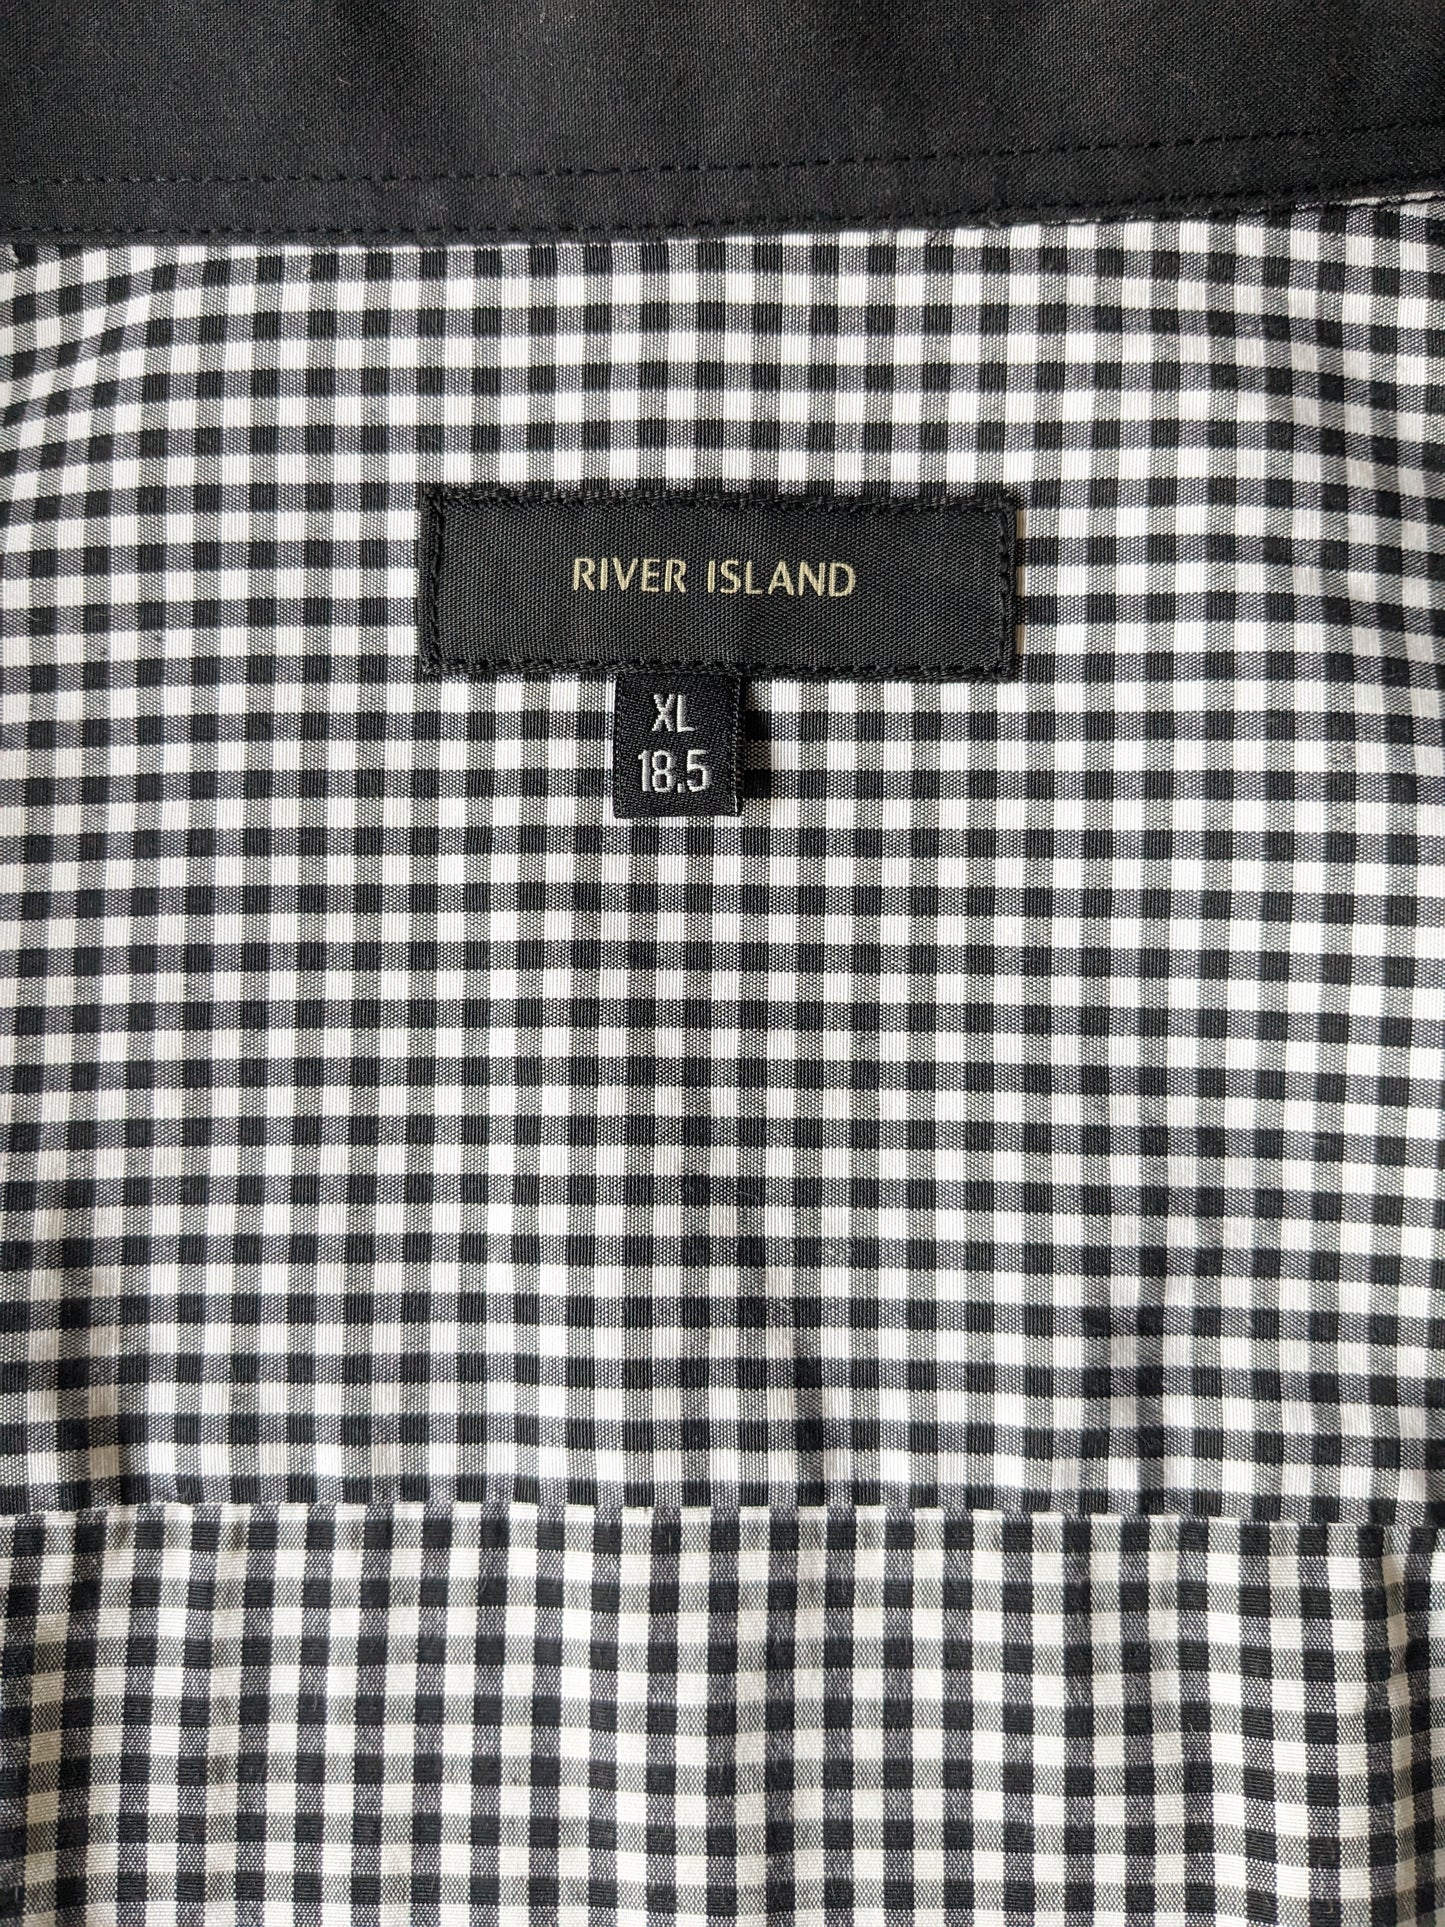 River Island overhemd. Zwart Wit geblokt. Maat XL.